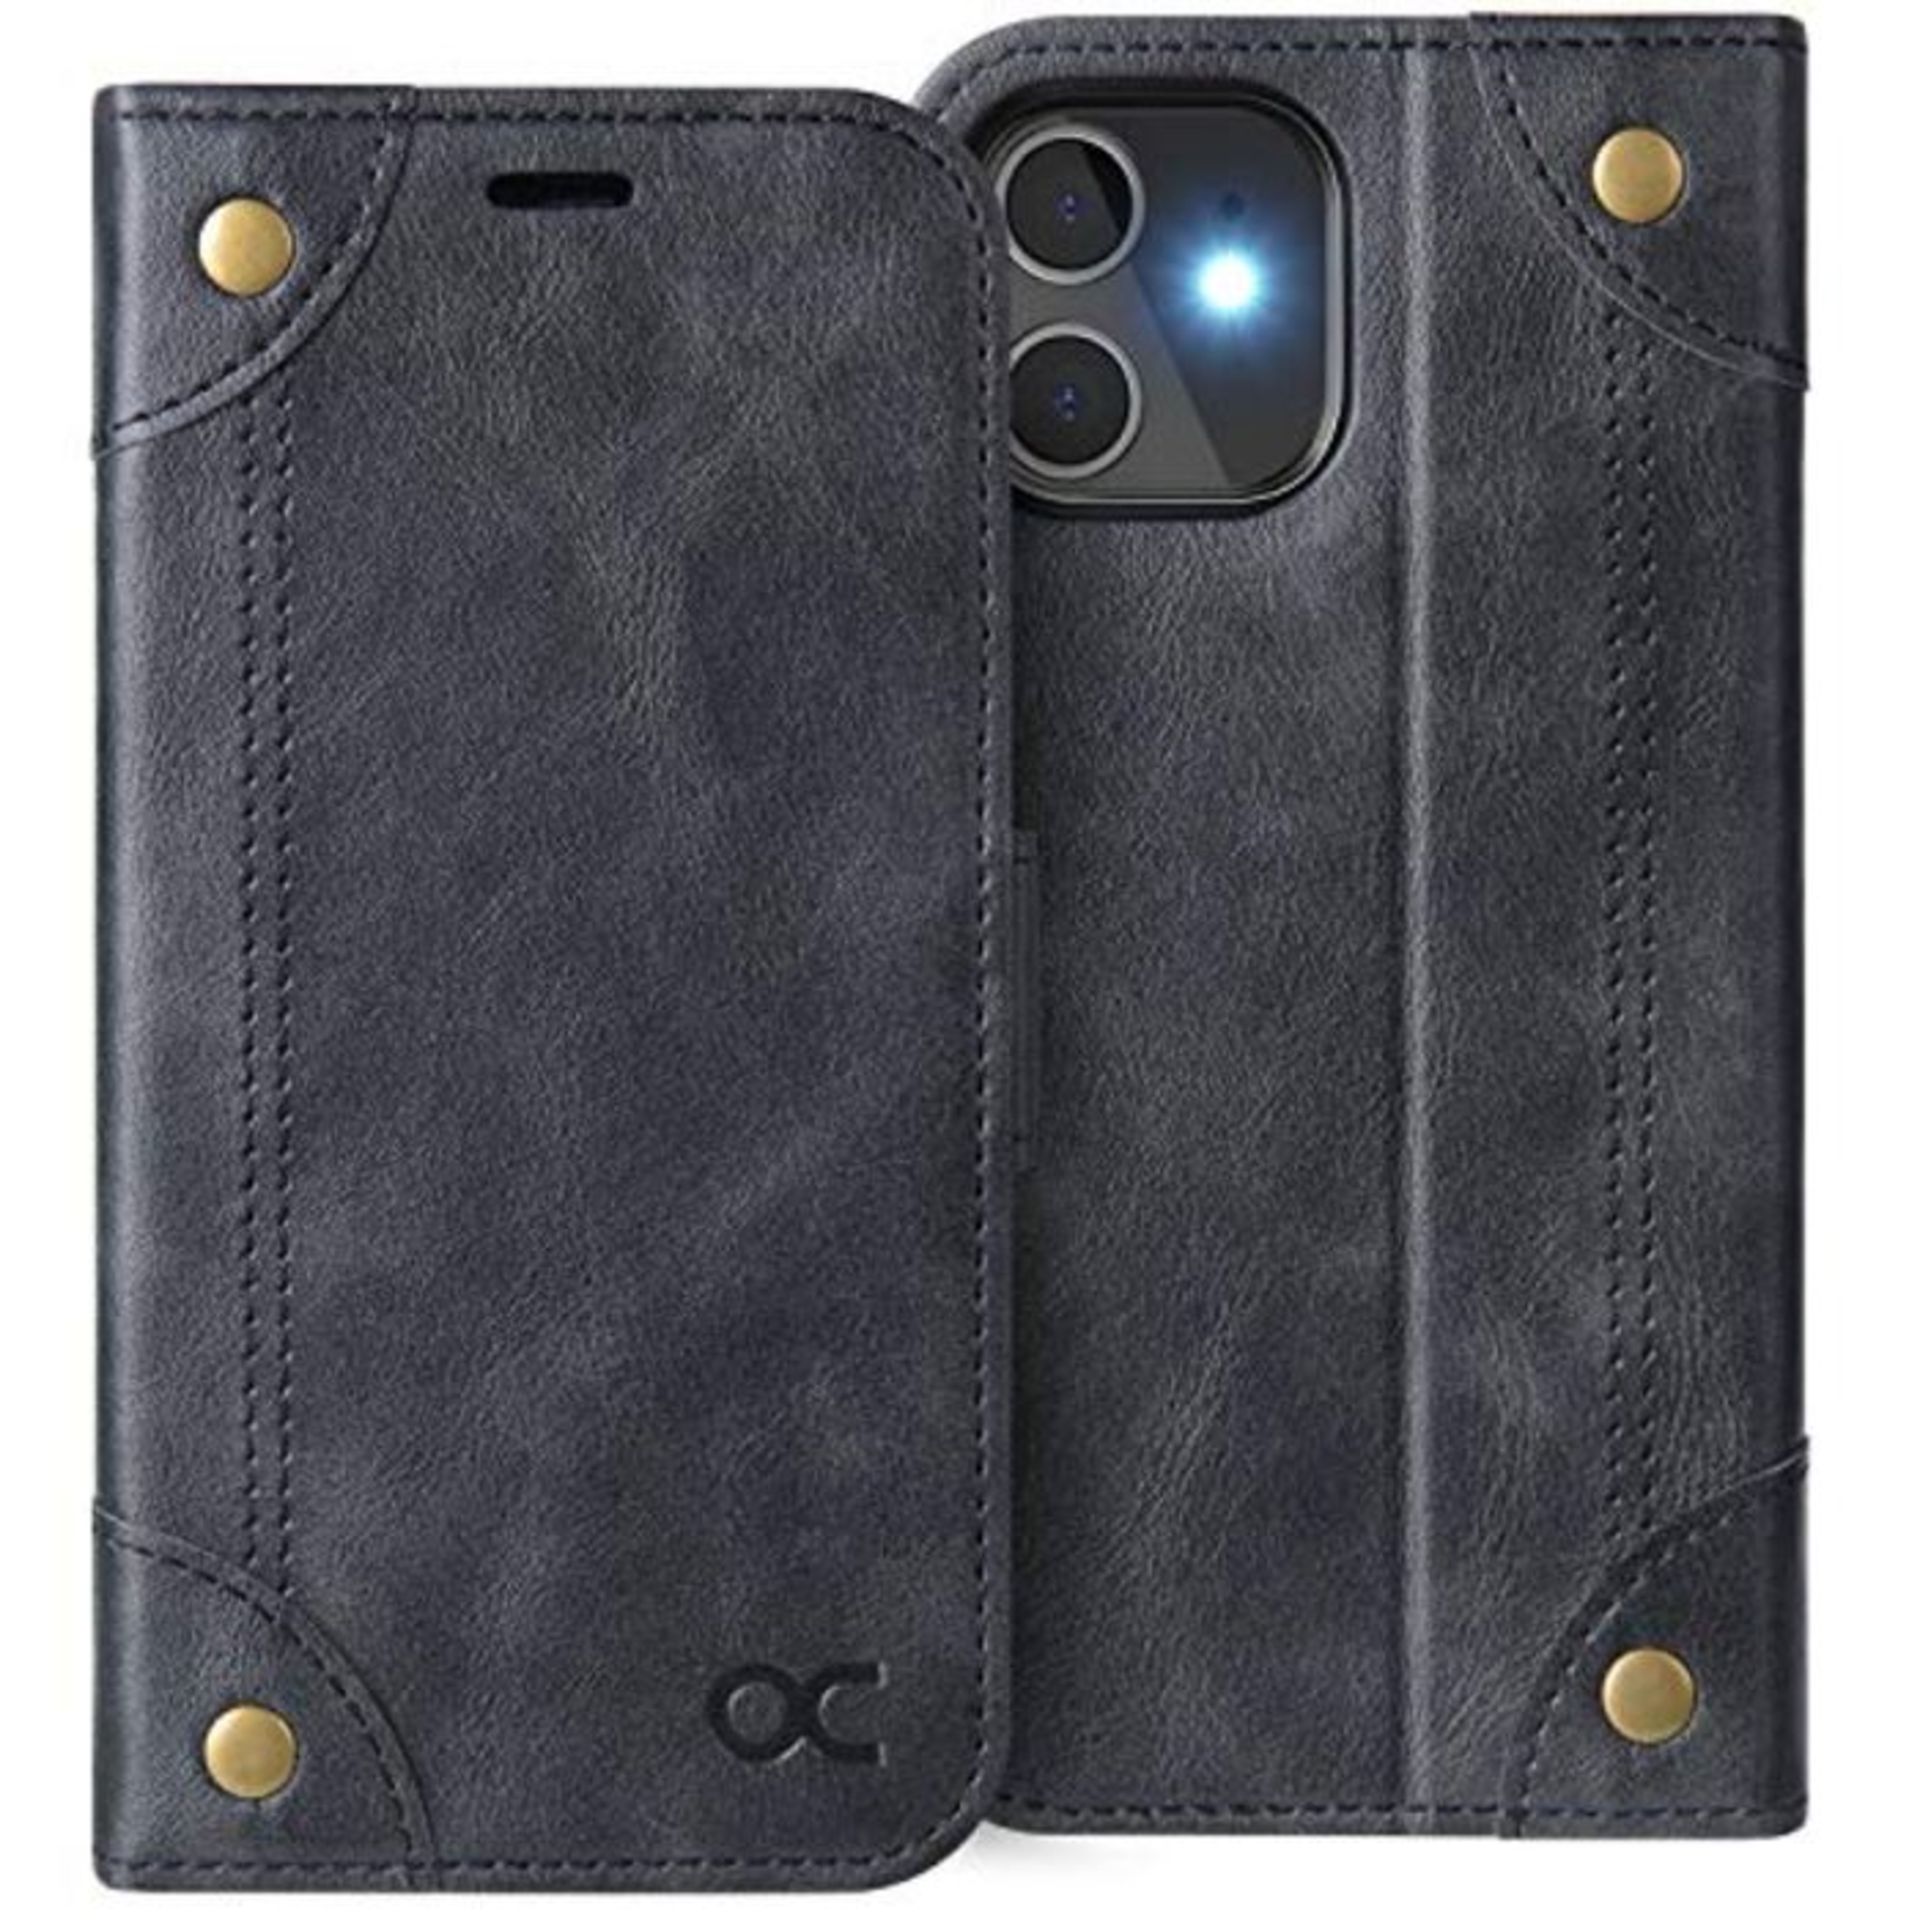 OCASE iPhone 12 Mini Case, iPhone 12 Mini Rivet Wallet 5G Case, PU Leather Folio Flip